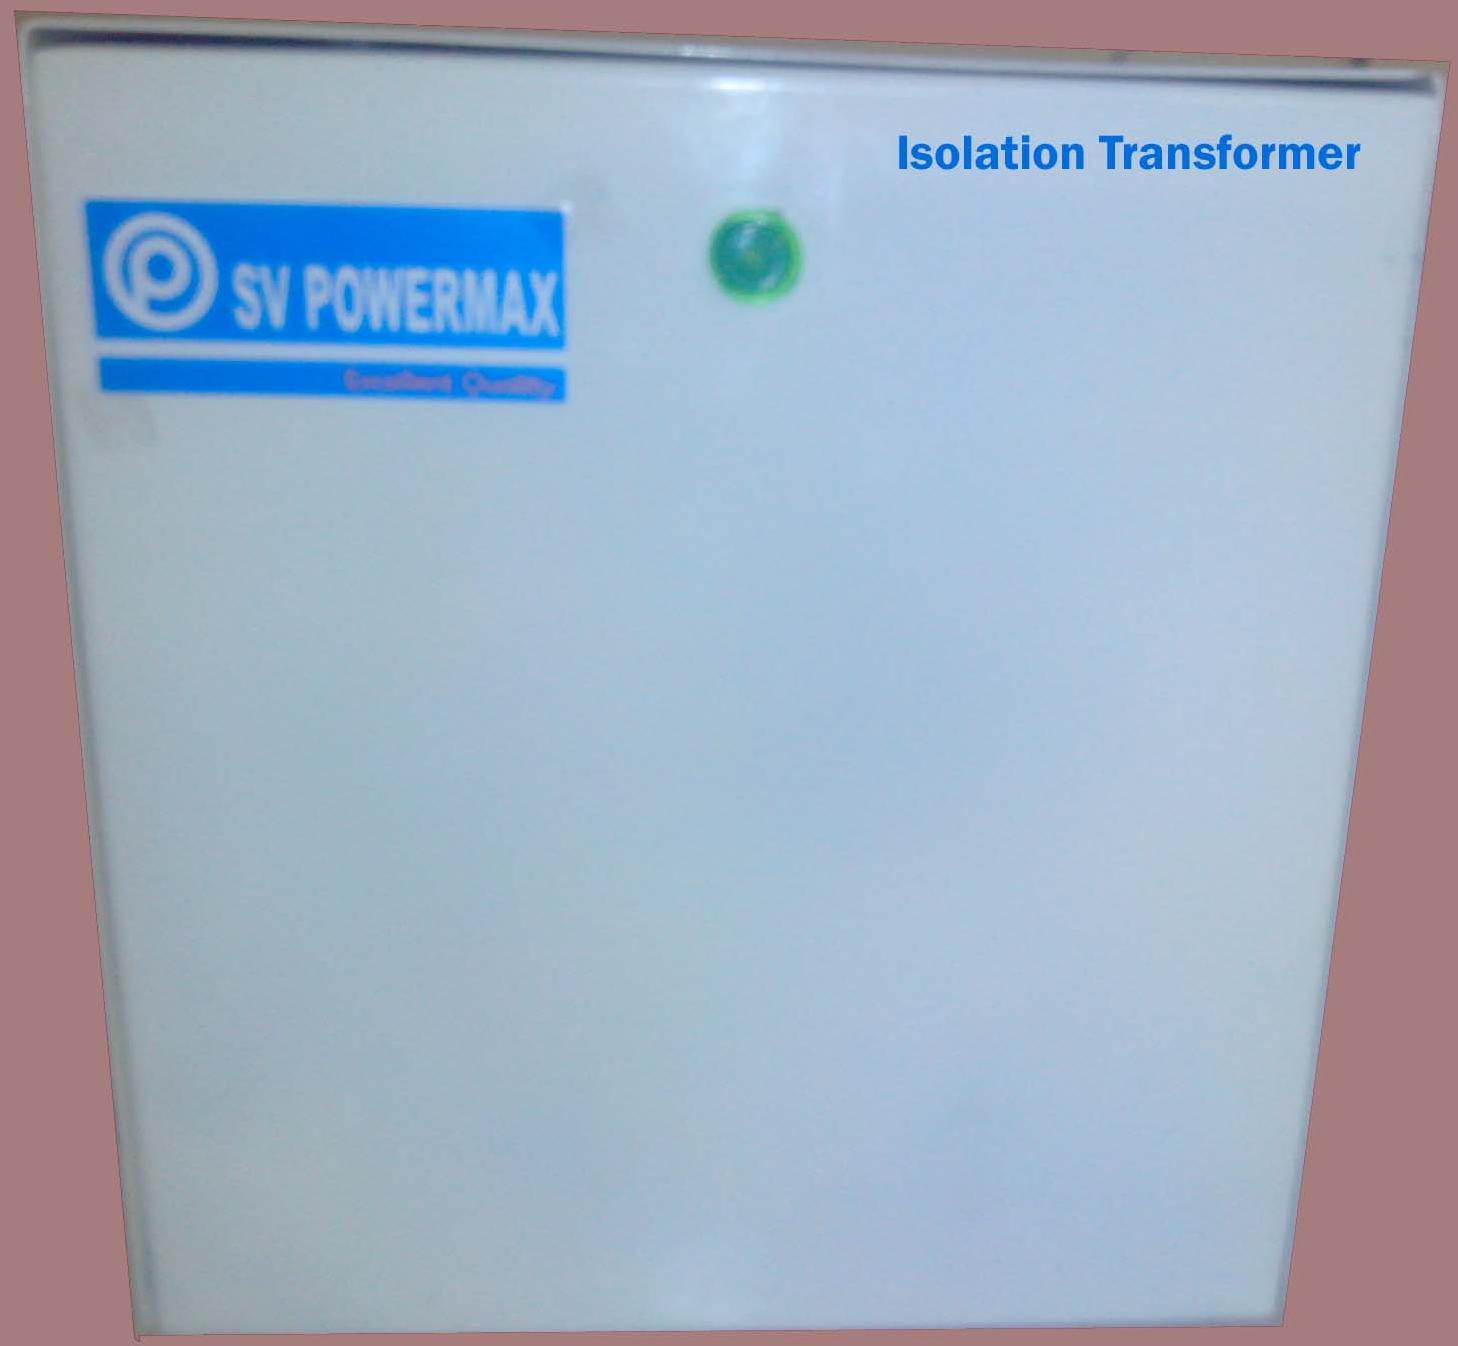 SV POWERMAX Isolation Transformer